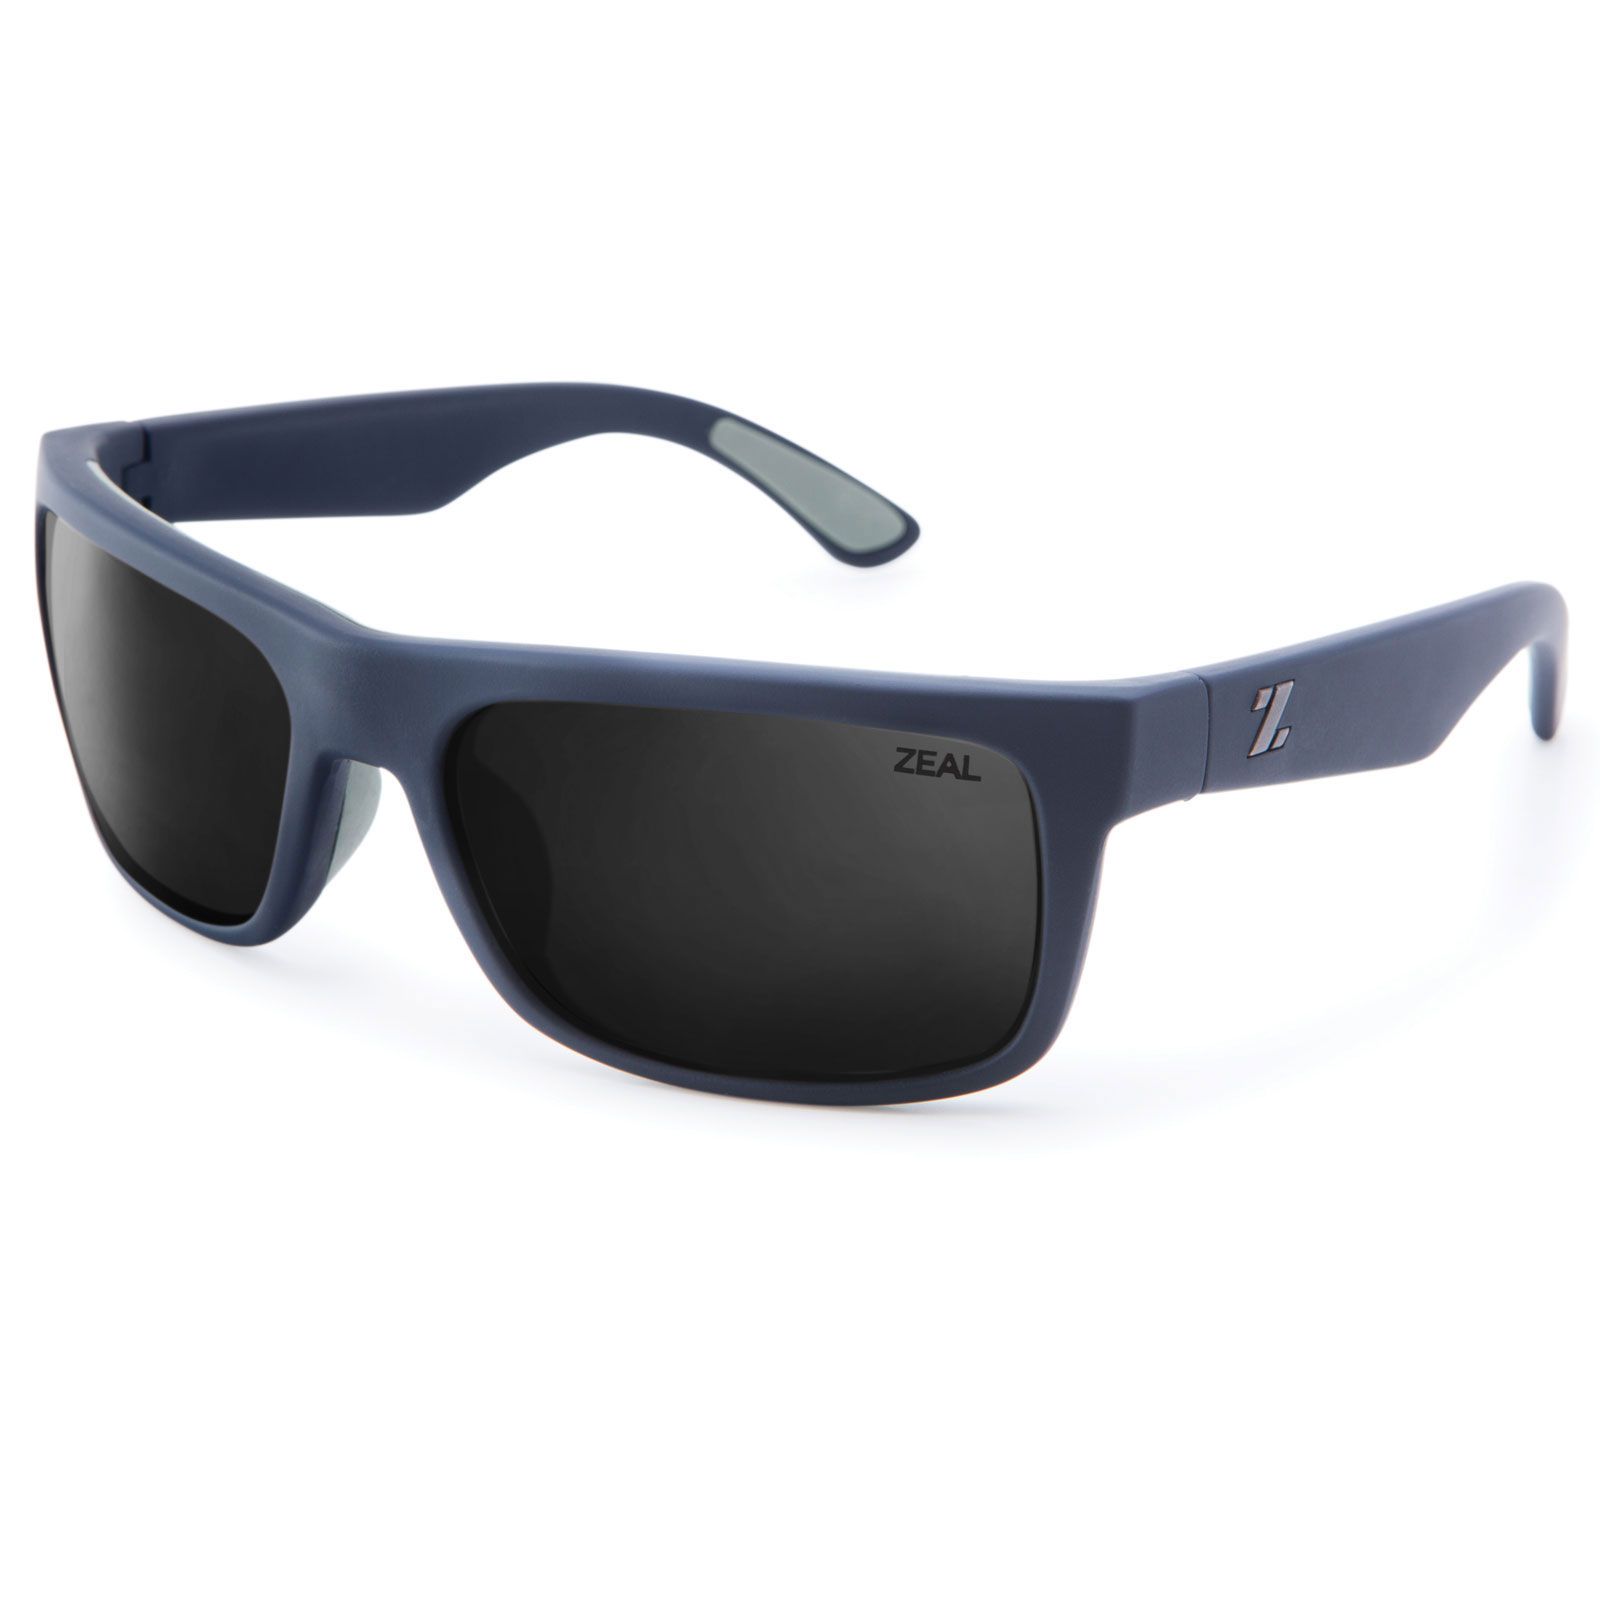 zeal optics essential polarized sunglasses - navy blue frame with dark grey lens | Walmart (US)